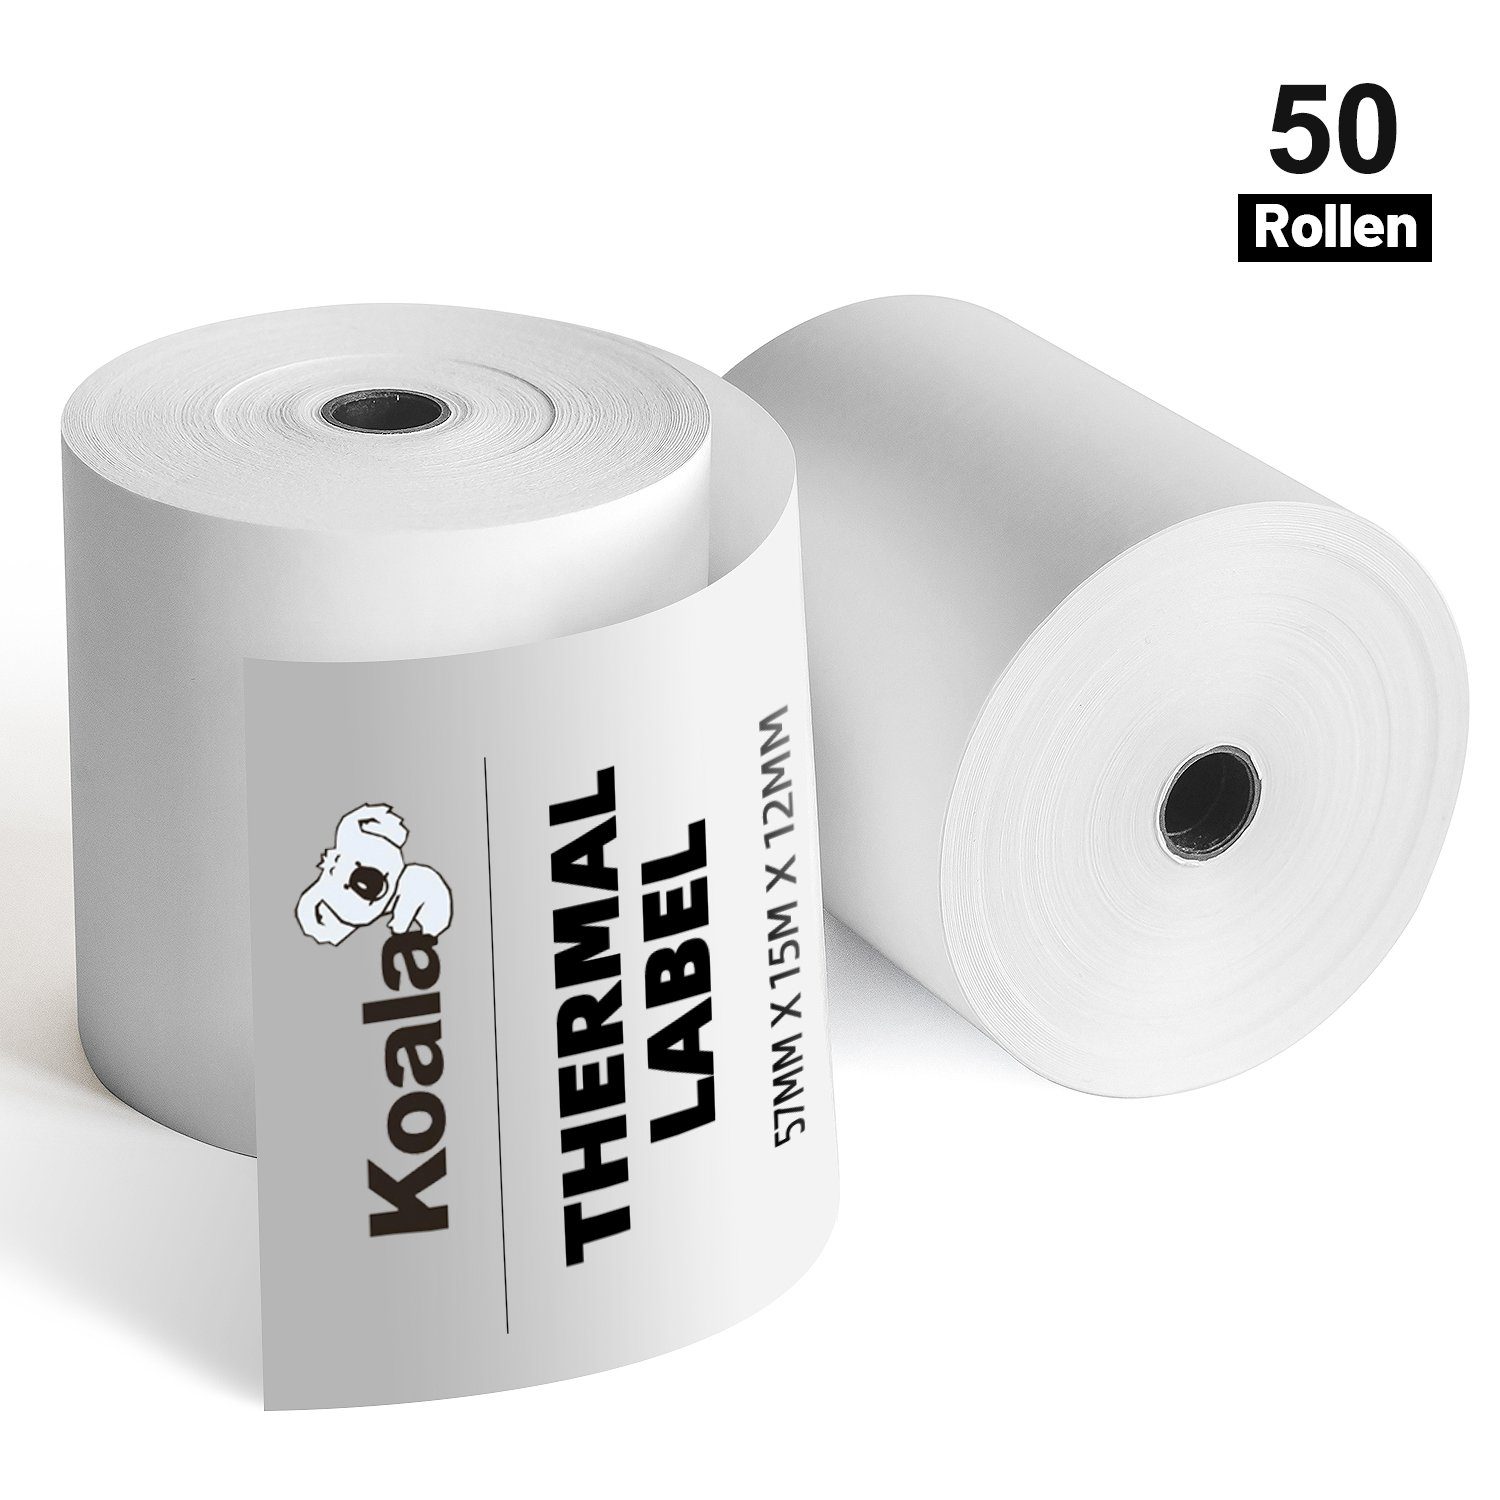 Koala Etikettenpapier 50 Rollen 57 x 15m Thermopapier Bonrolle für Kassen, Drucker